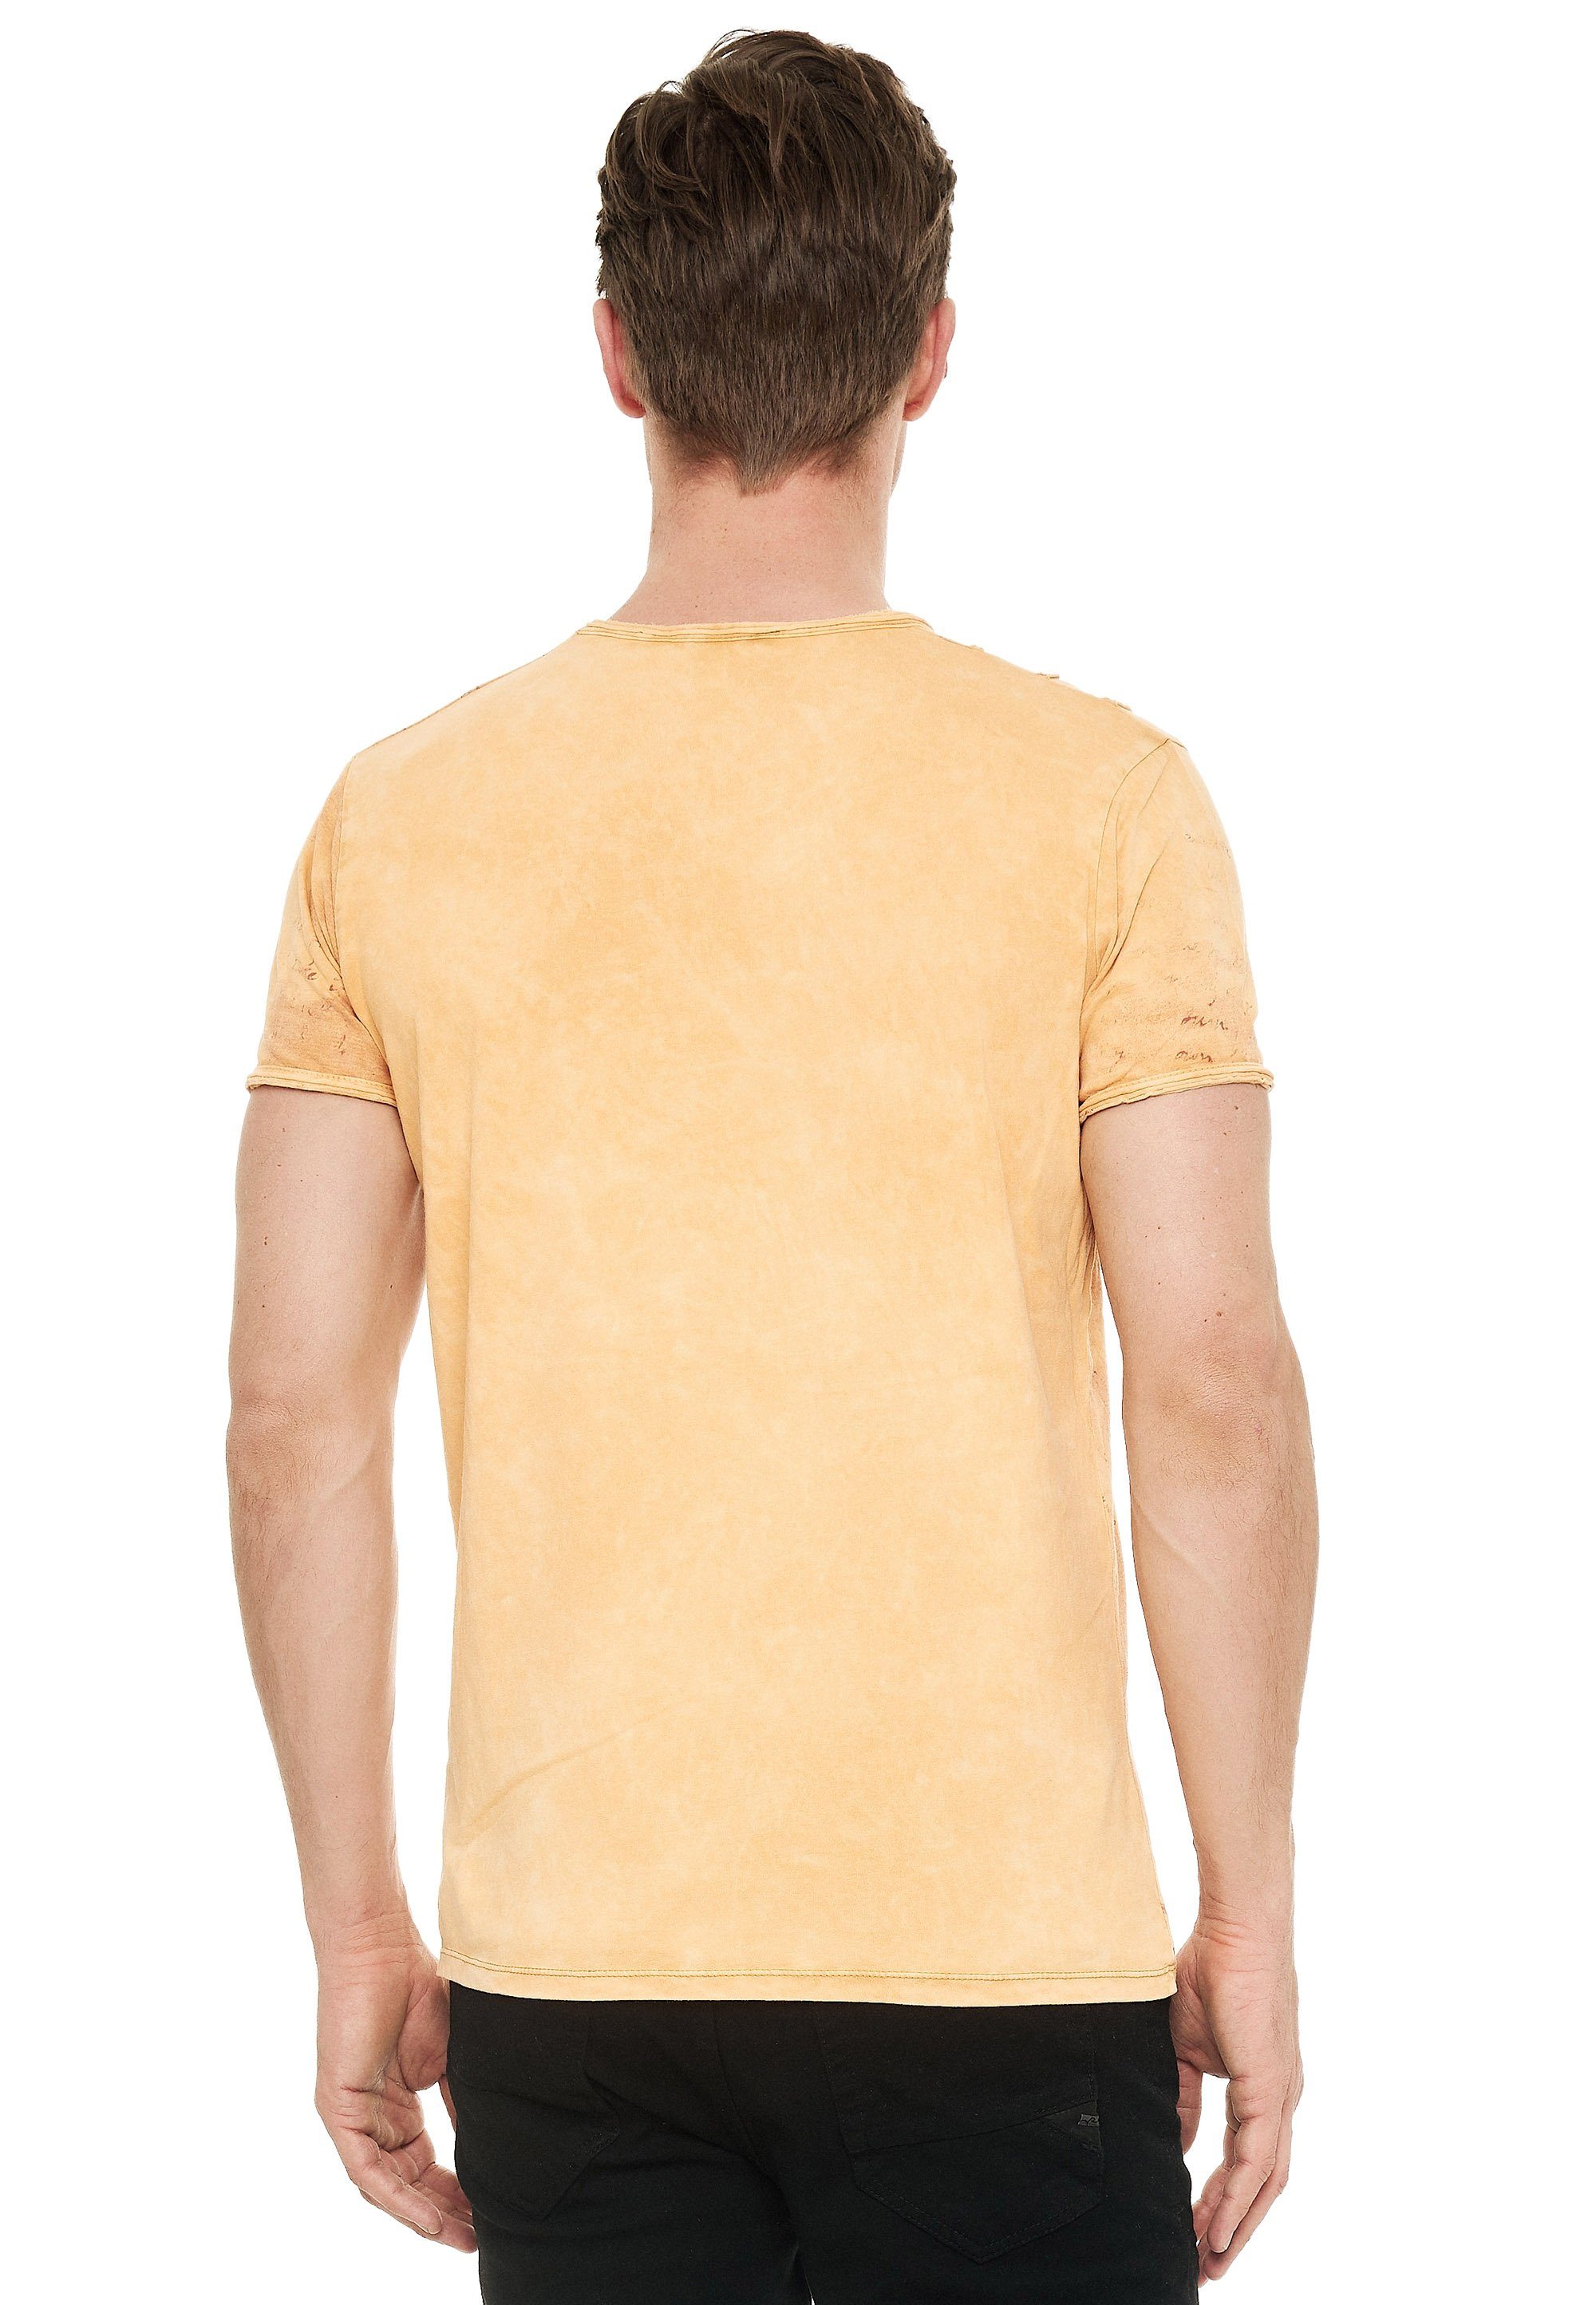 T-Shirt Neal Print mit Rusty camelfarben eindrucksvollem